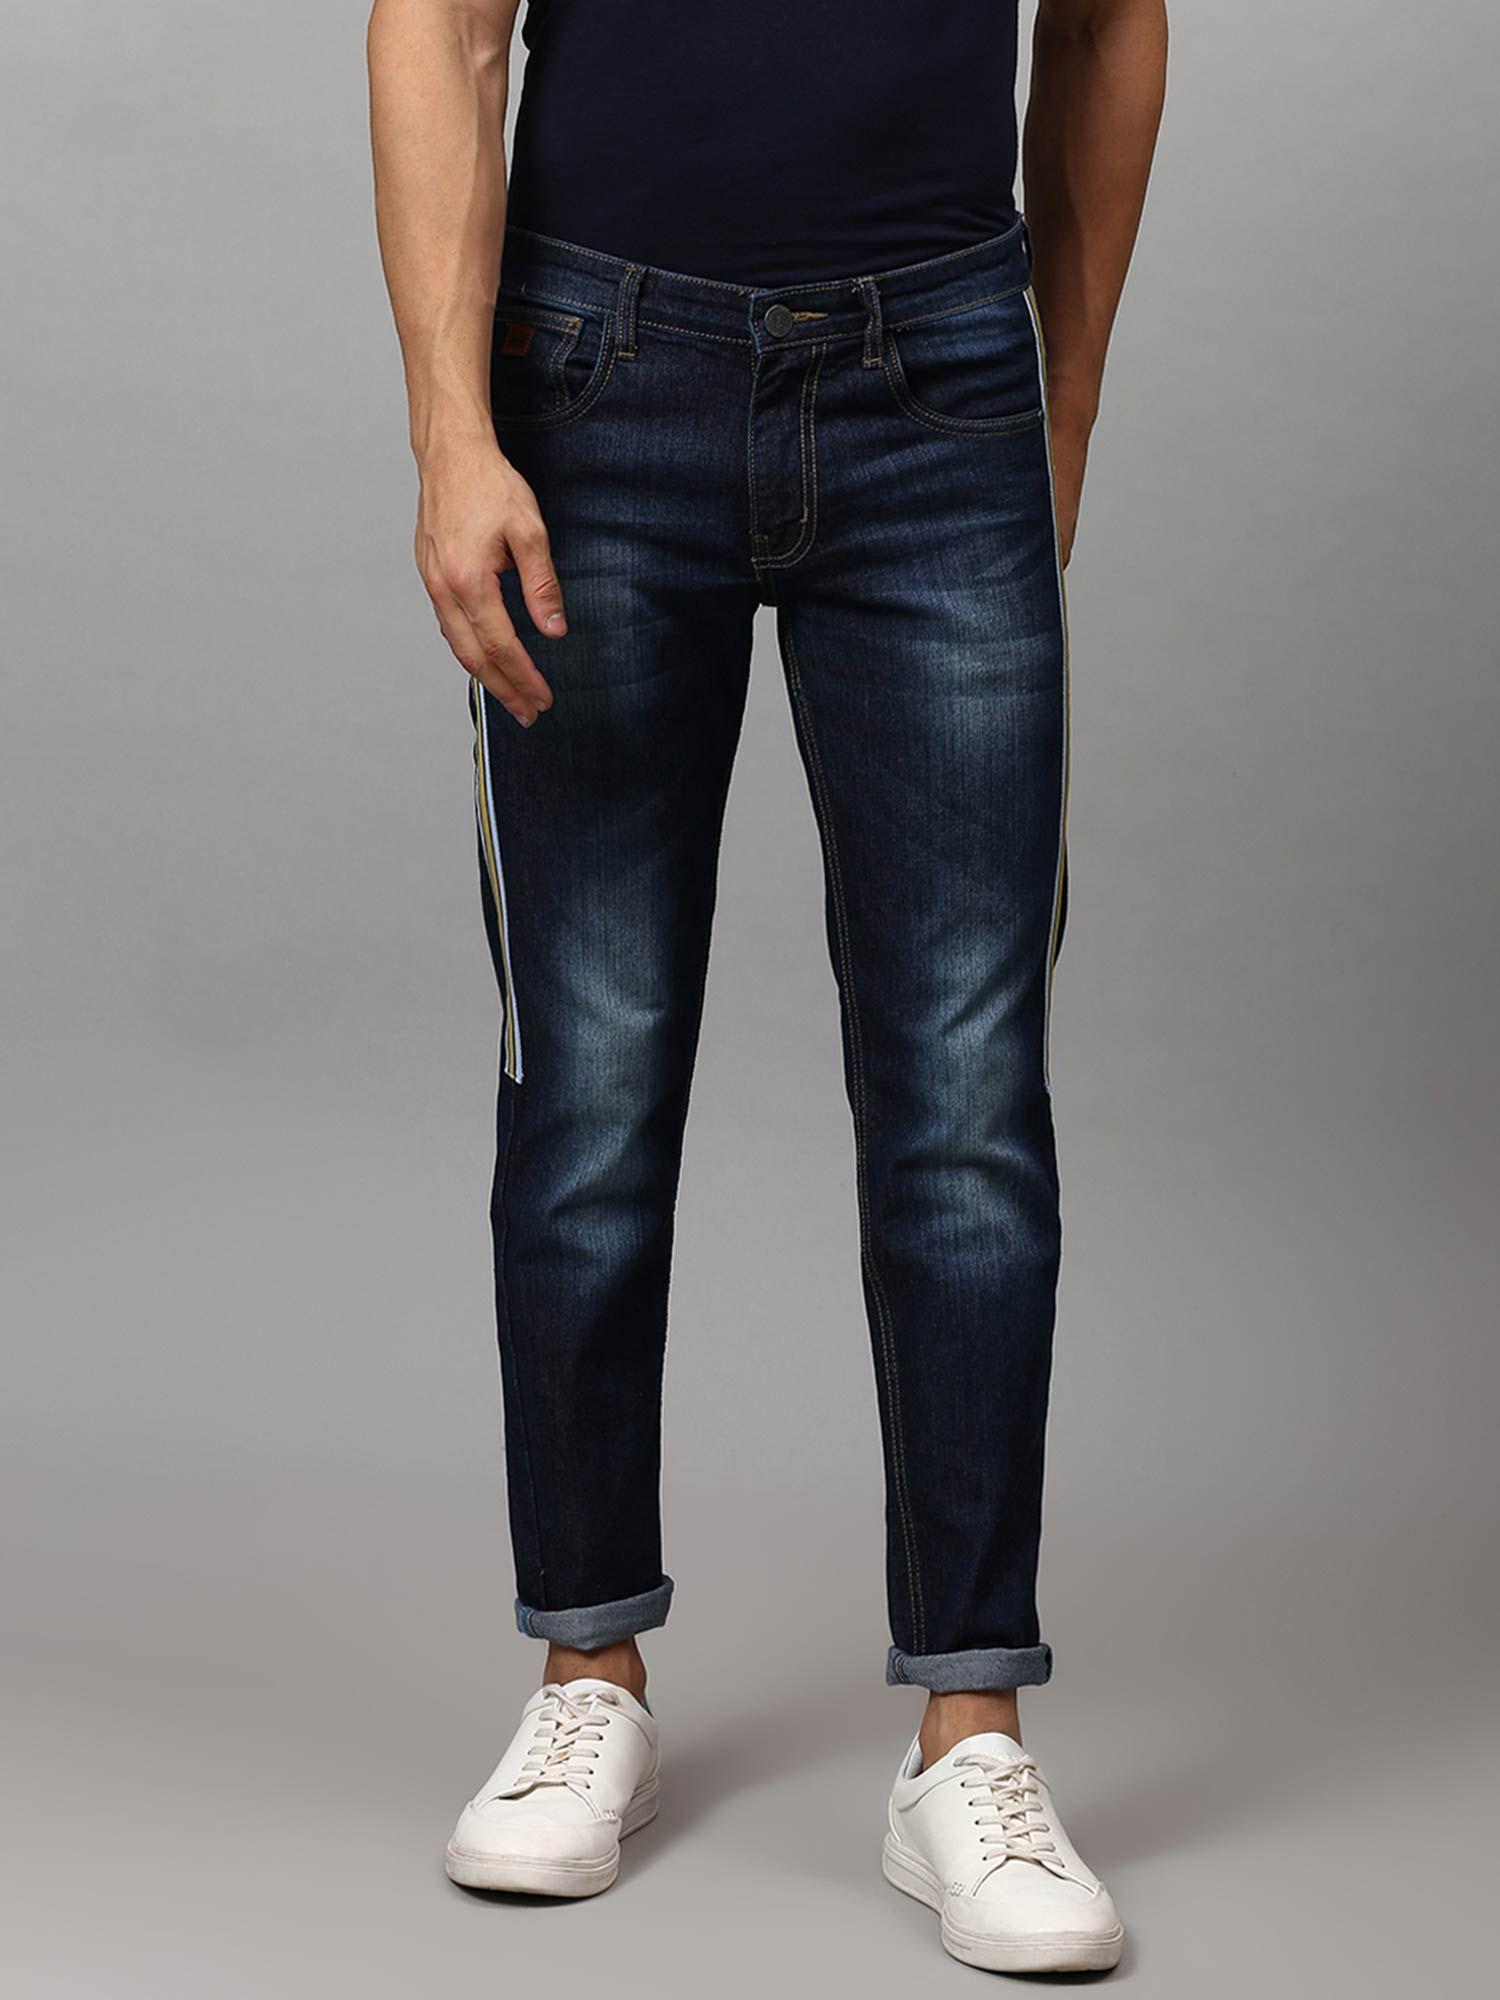 Men Side Striped Stylish Casual Denim Jeans